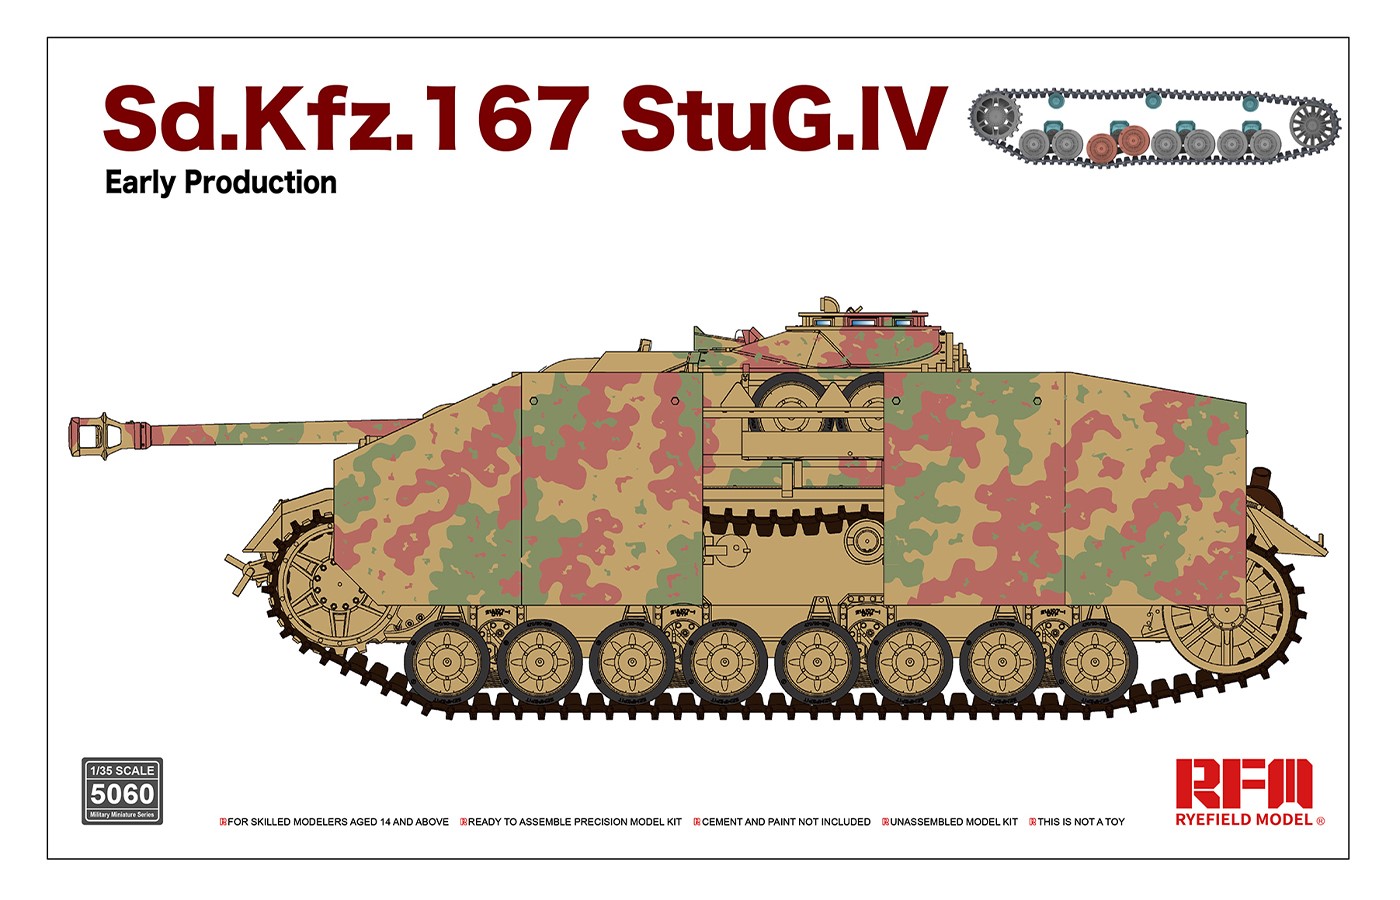 Sd.Kfz. 167 StuG IV - Early Production